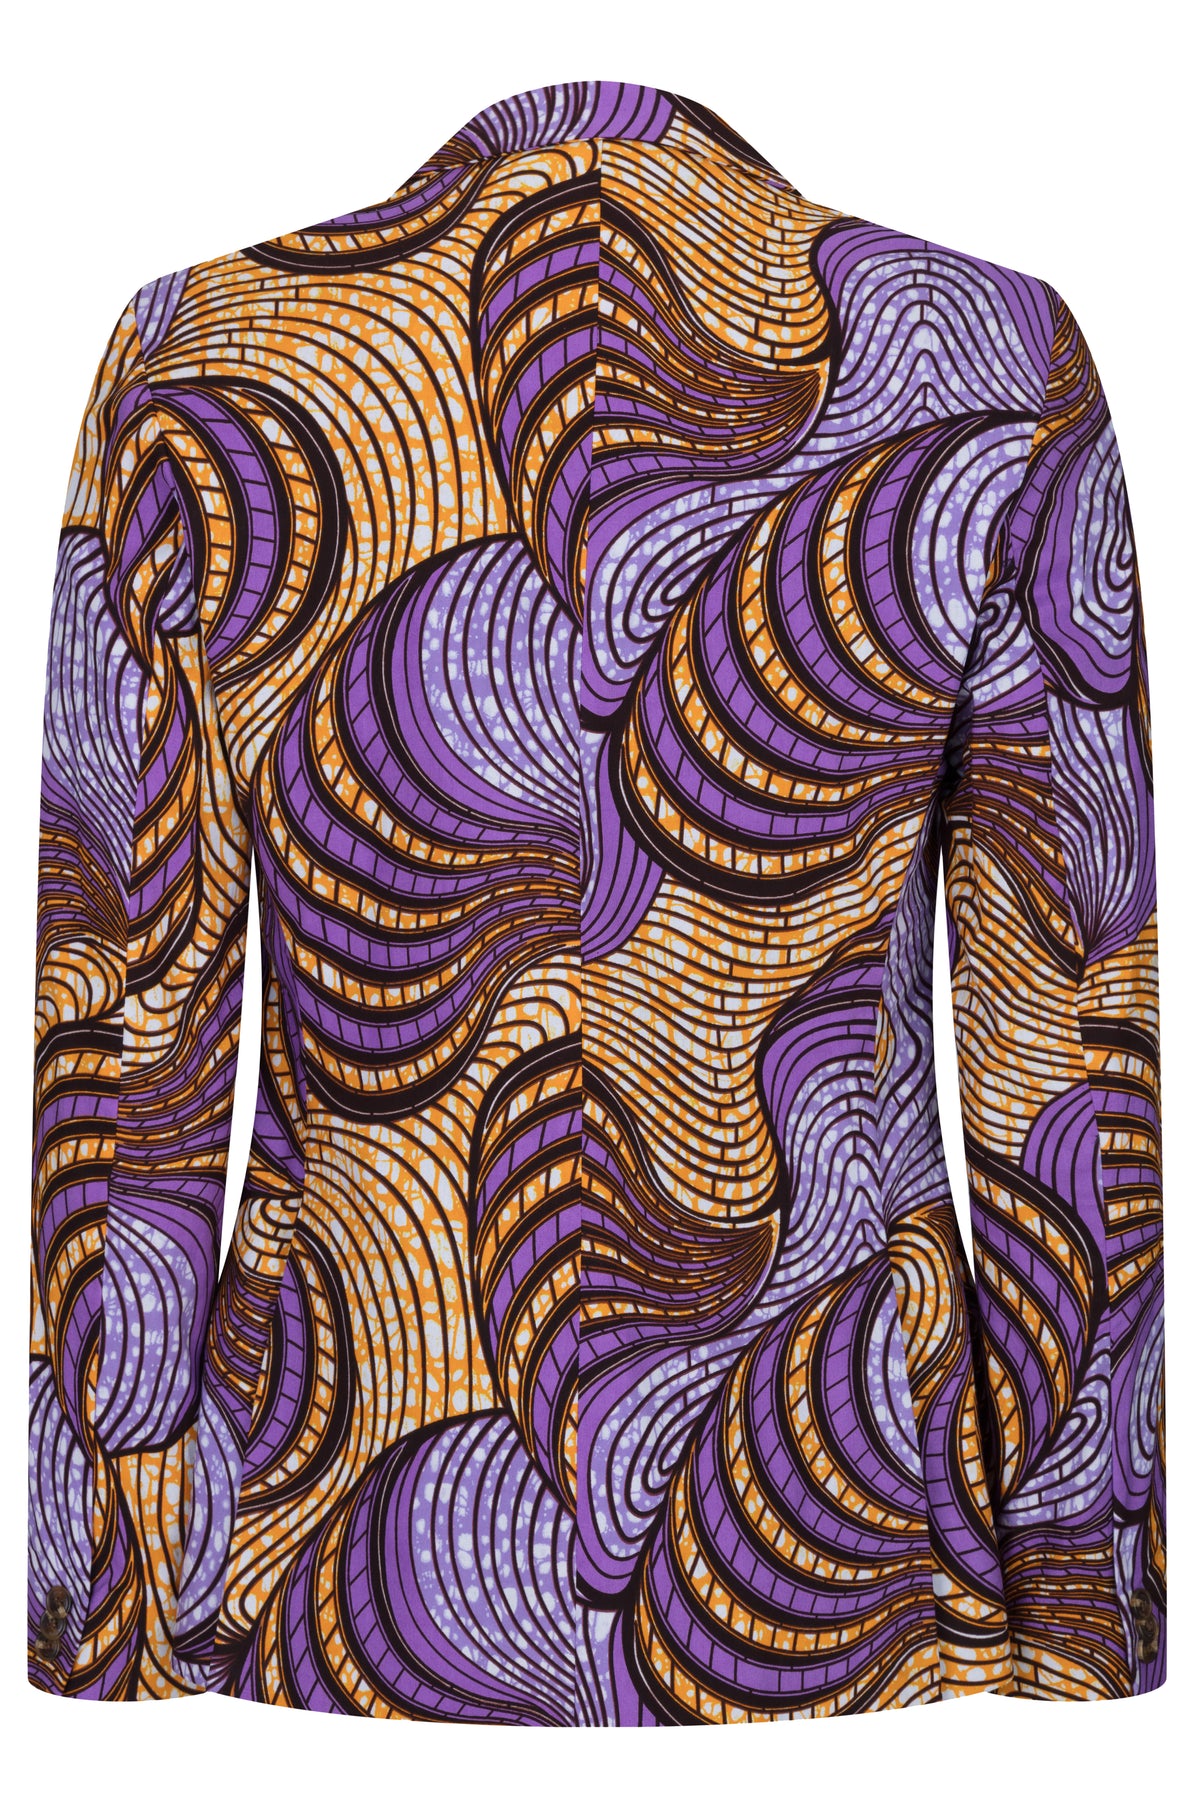 Femi Men's African Print Blazer- Fairground - OHEMA OHENE AFRICAN INSPIRED FASHION